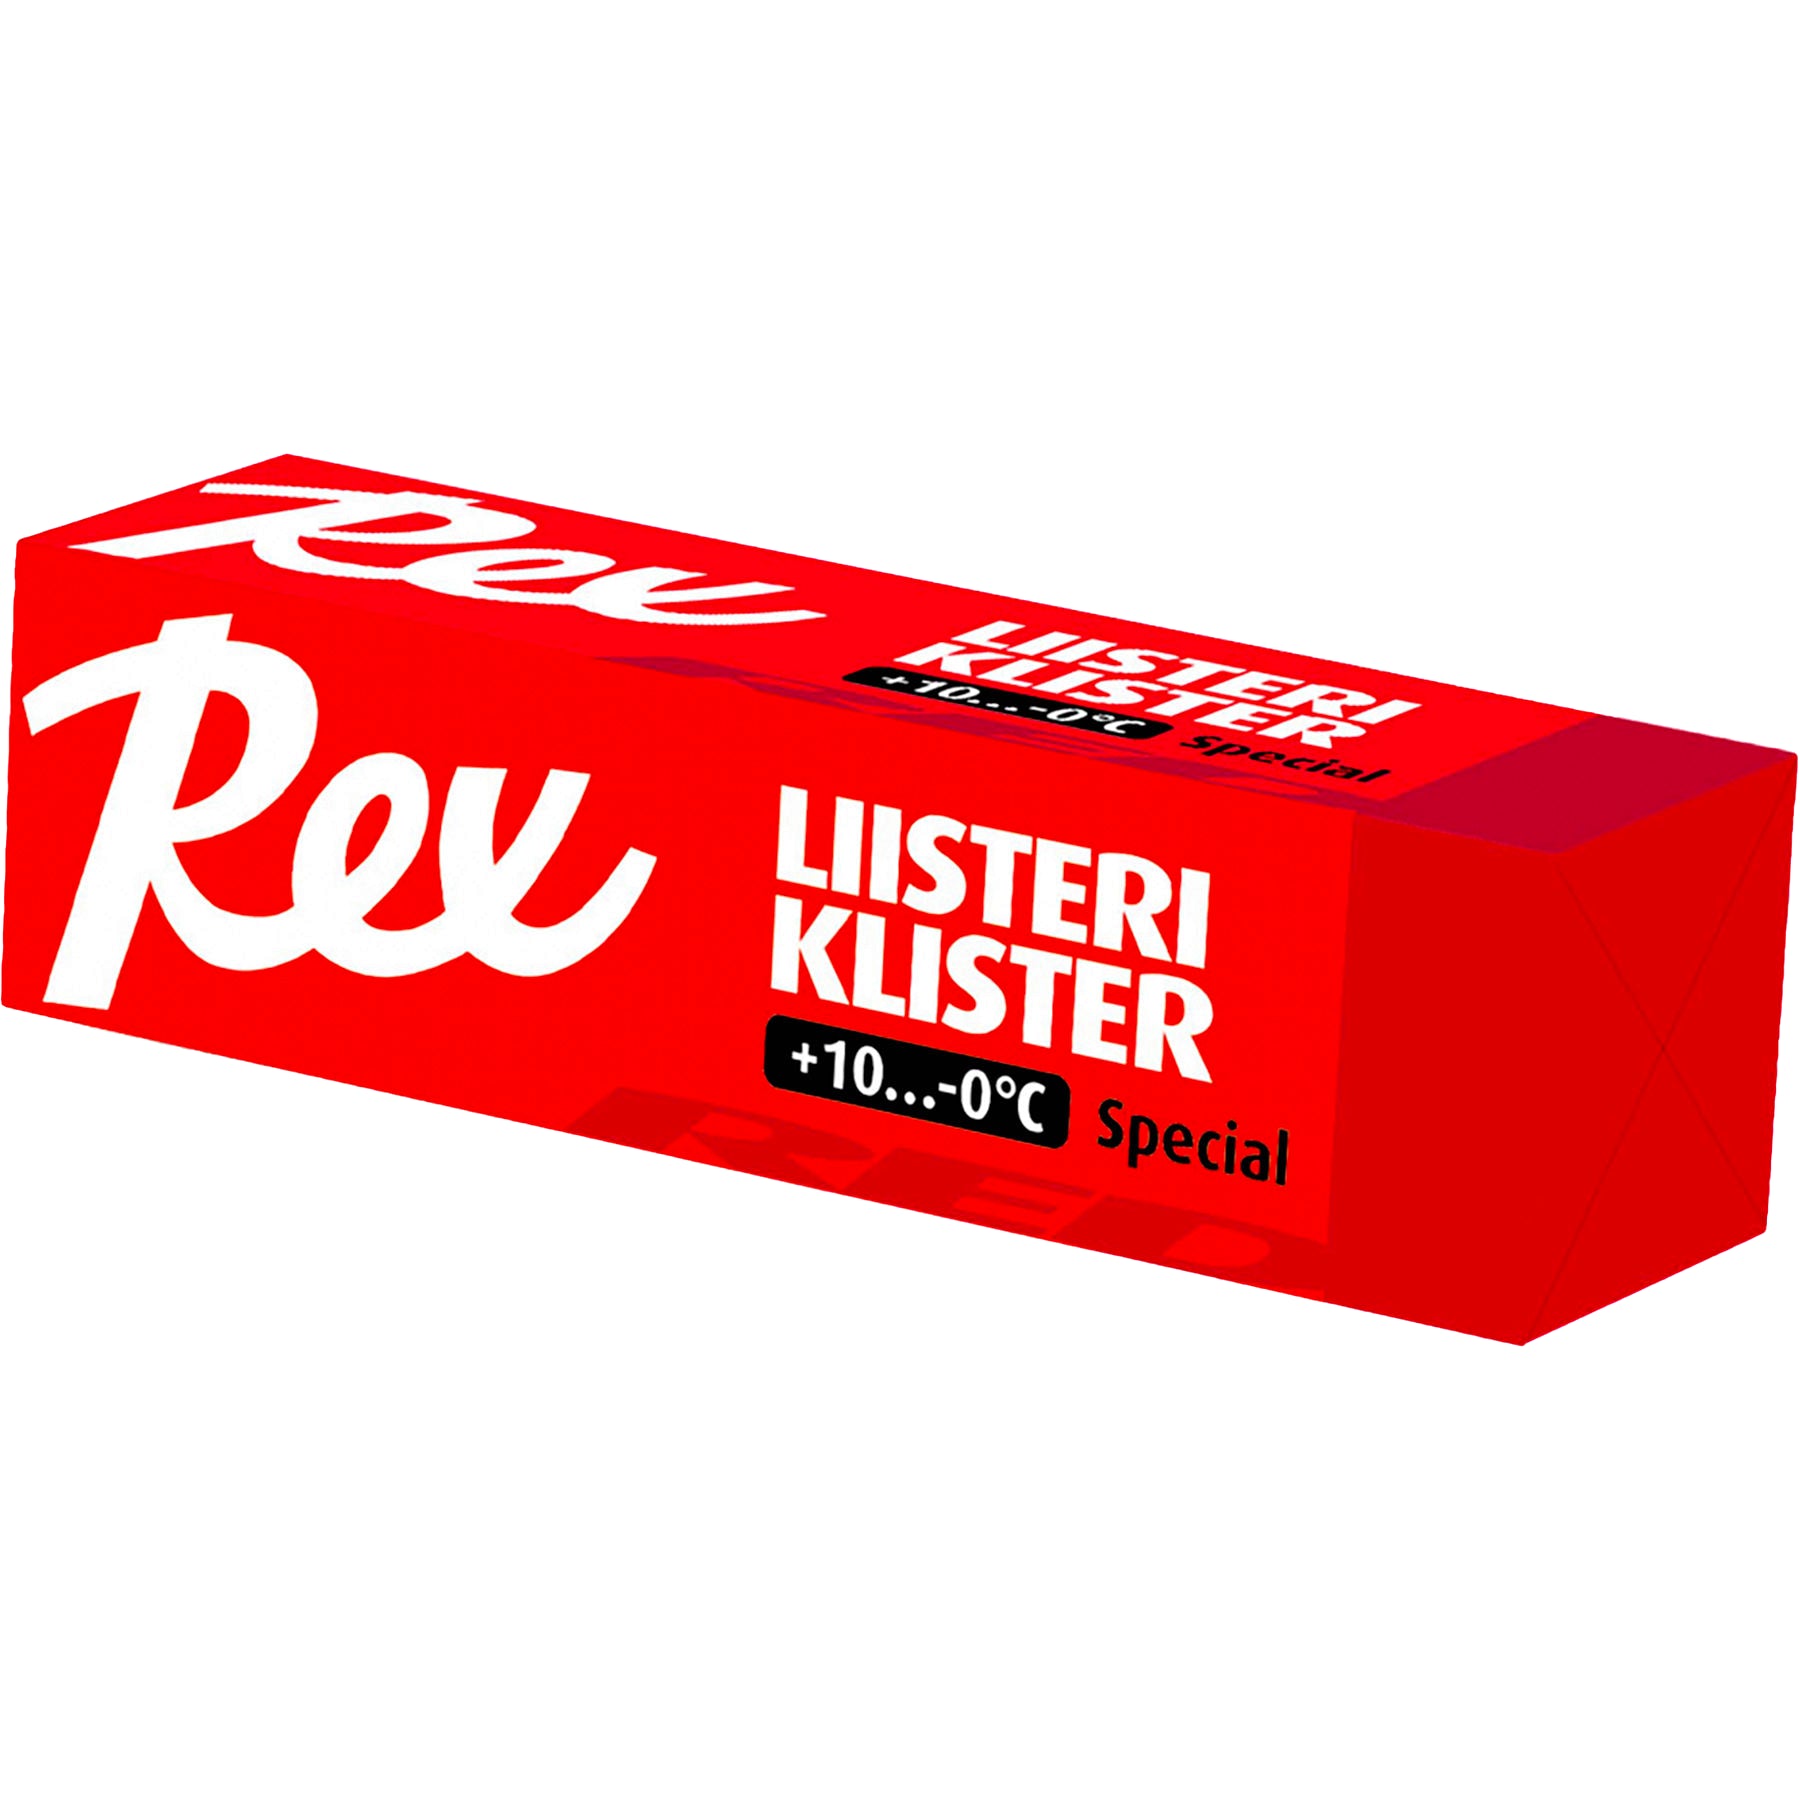 Buy red-210 Rex Klister